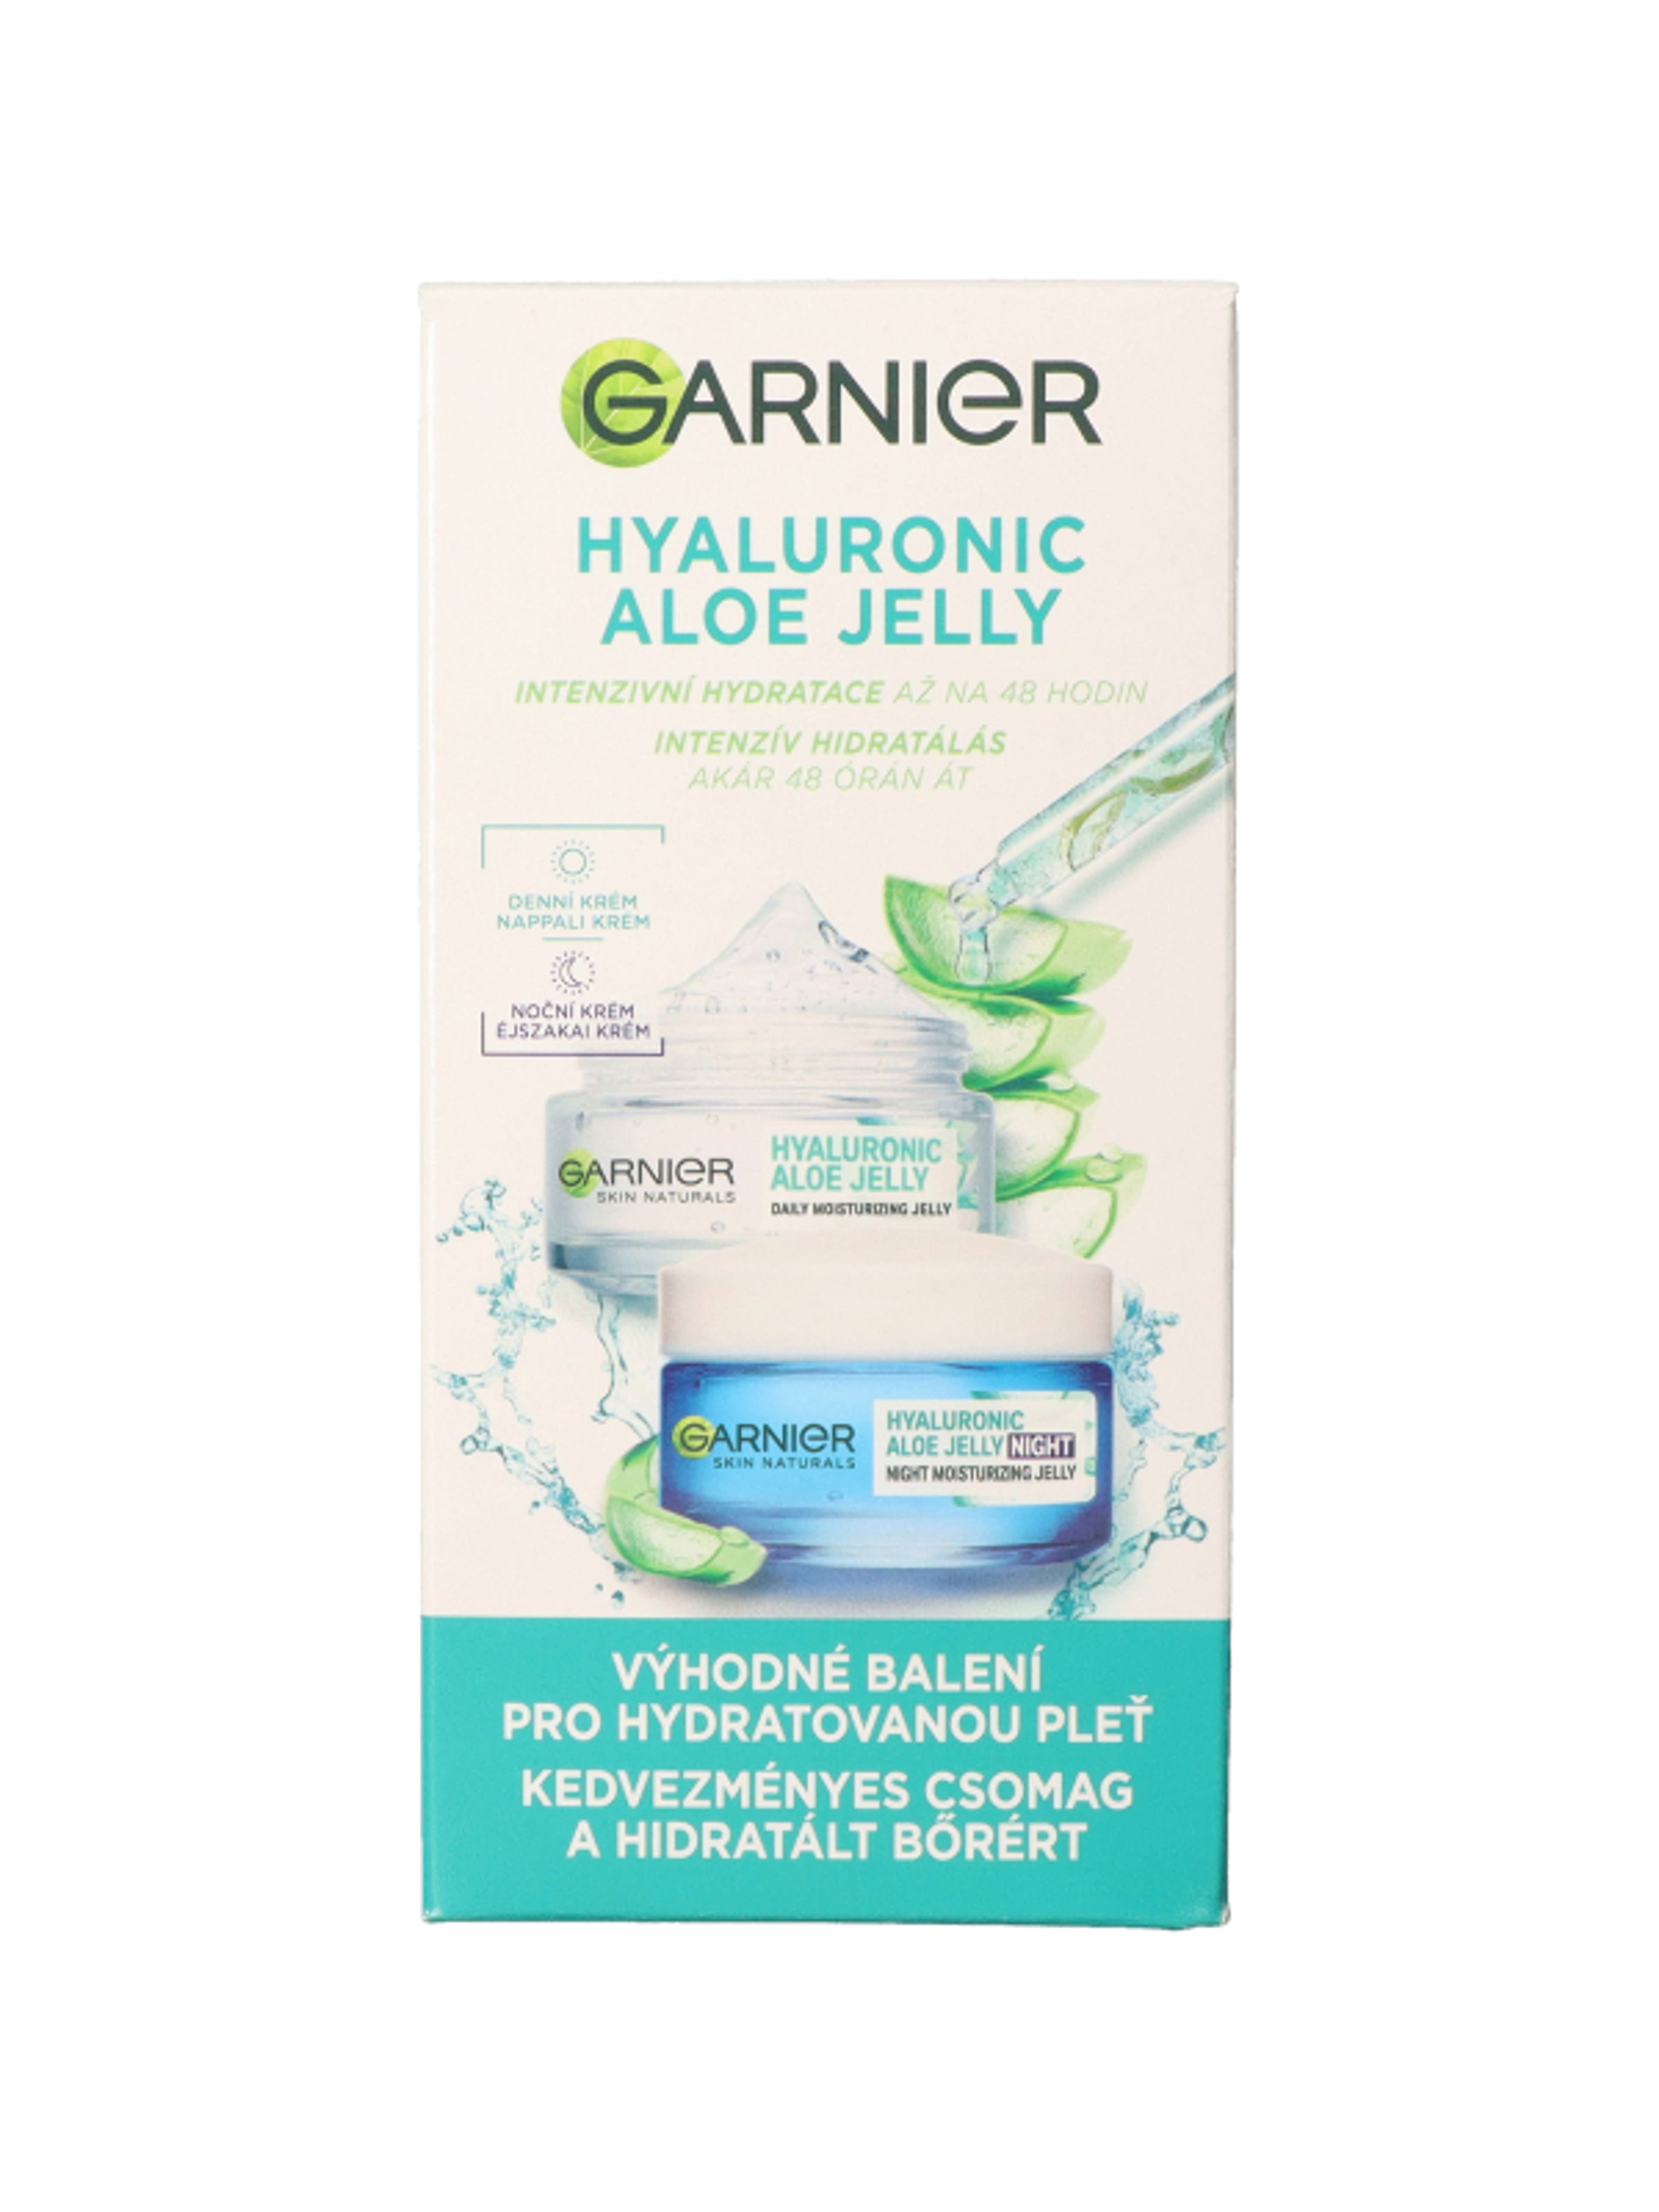 Garnier Hyaluronic Aloe Jelly arckrém duopack - 100 ml-1